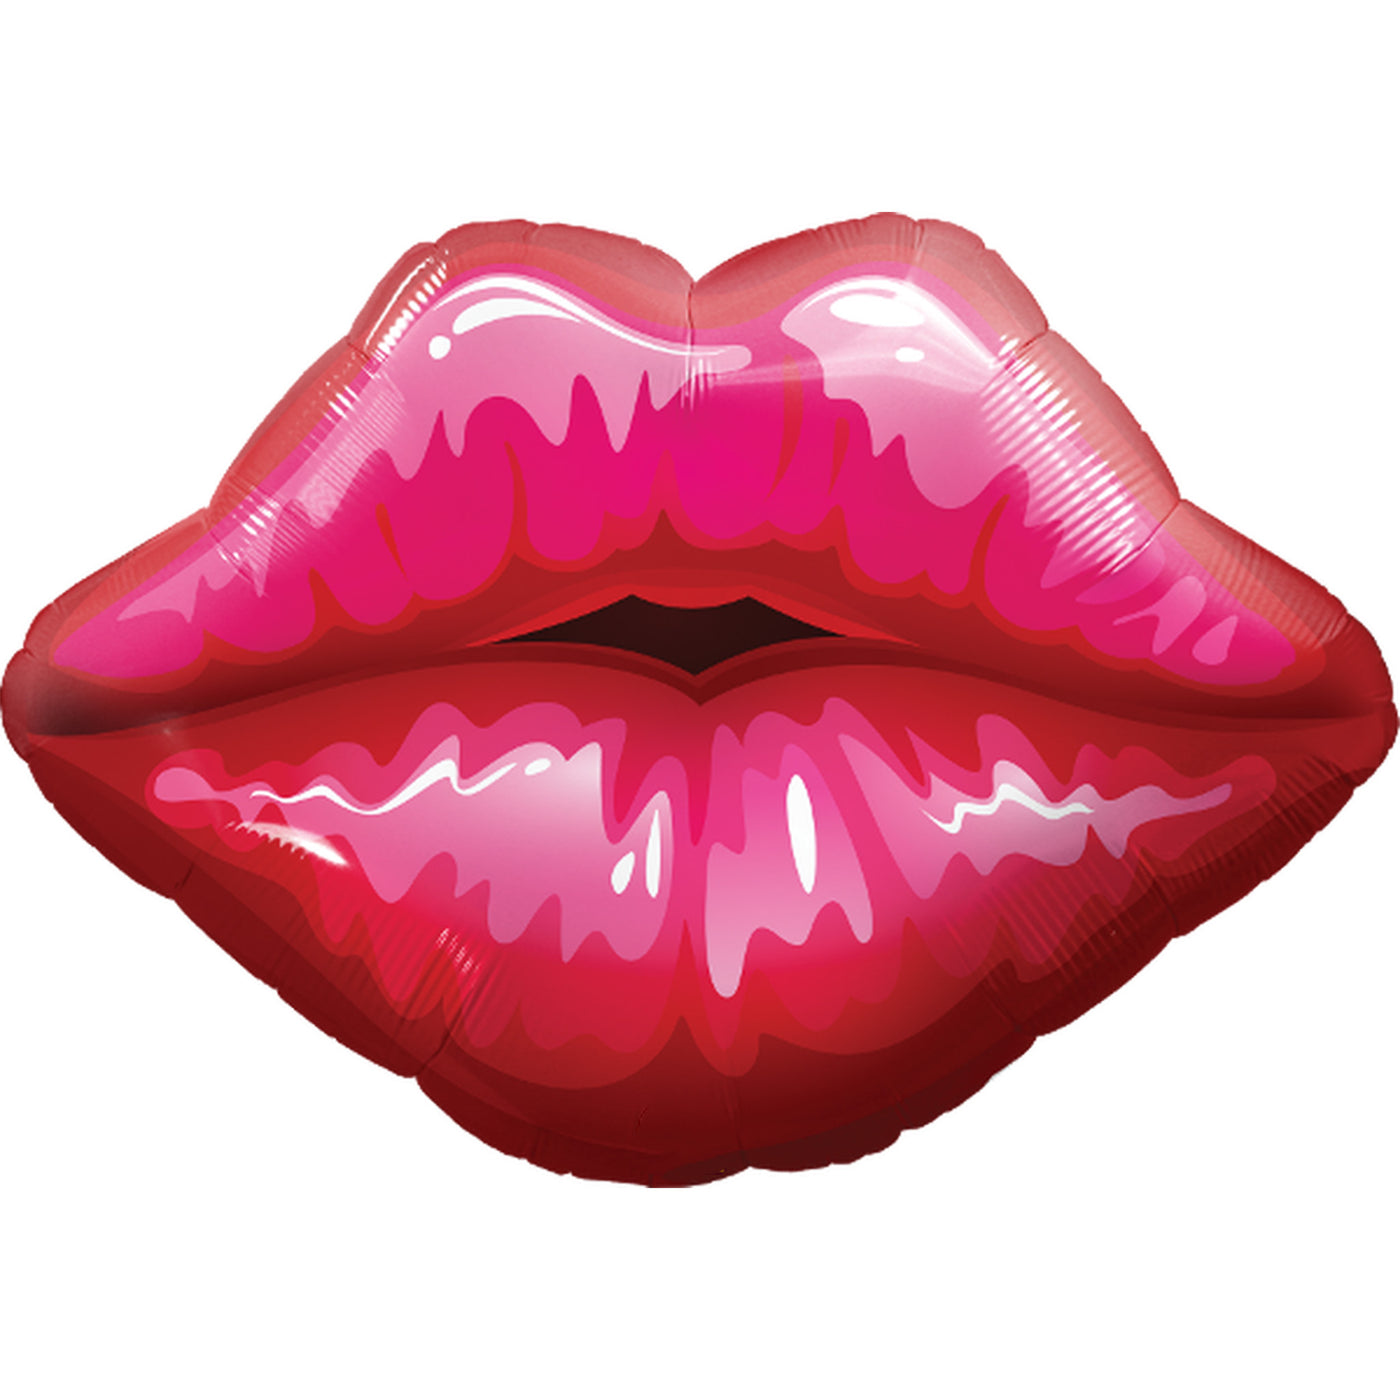 Red Kissy Lips Balloon